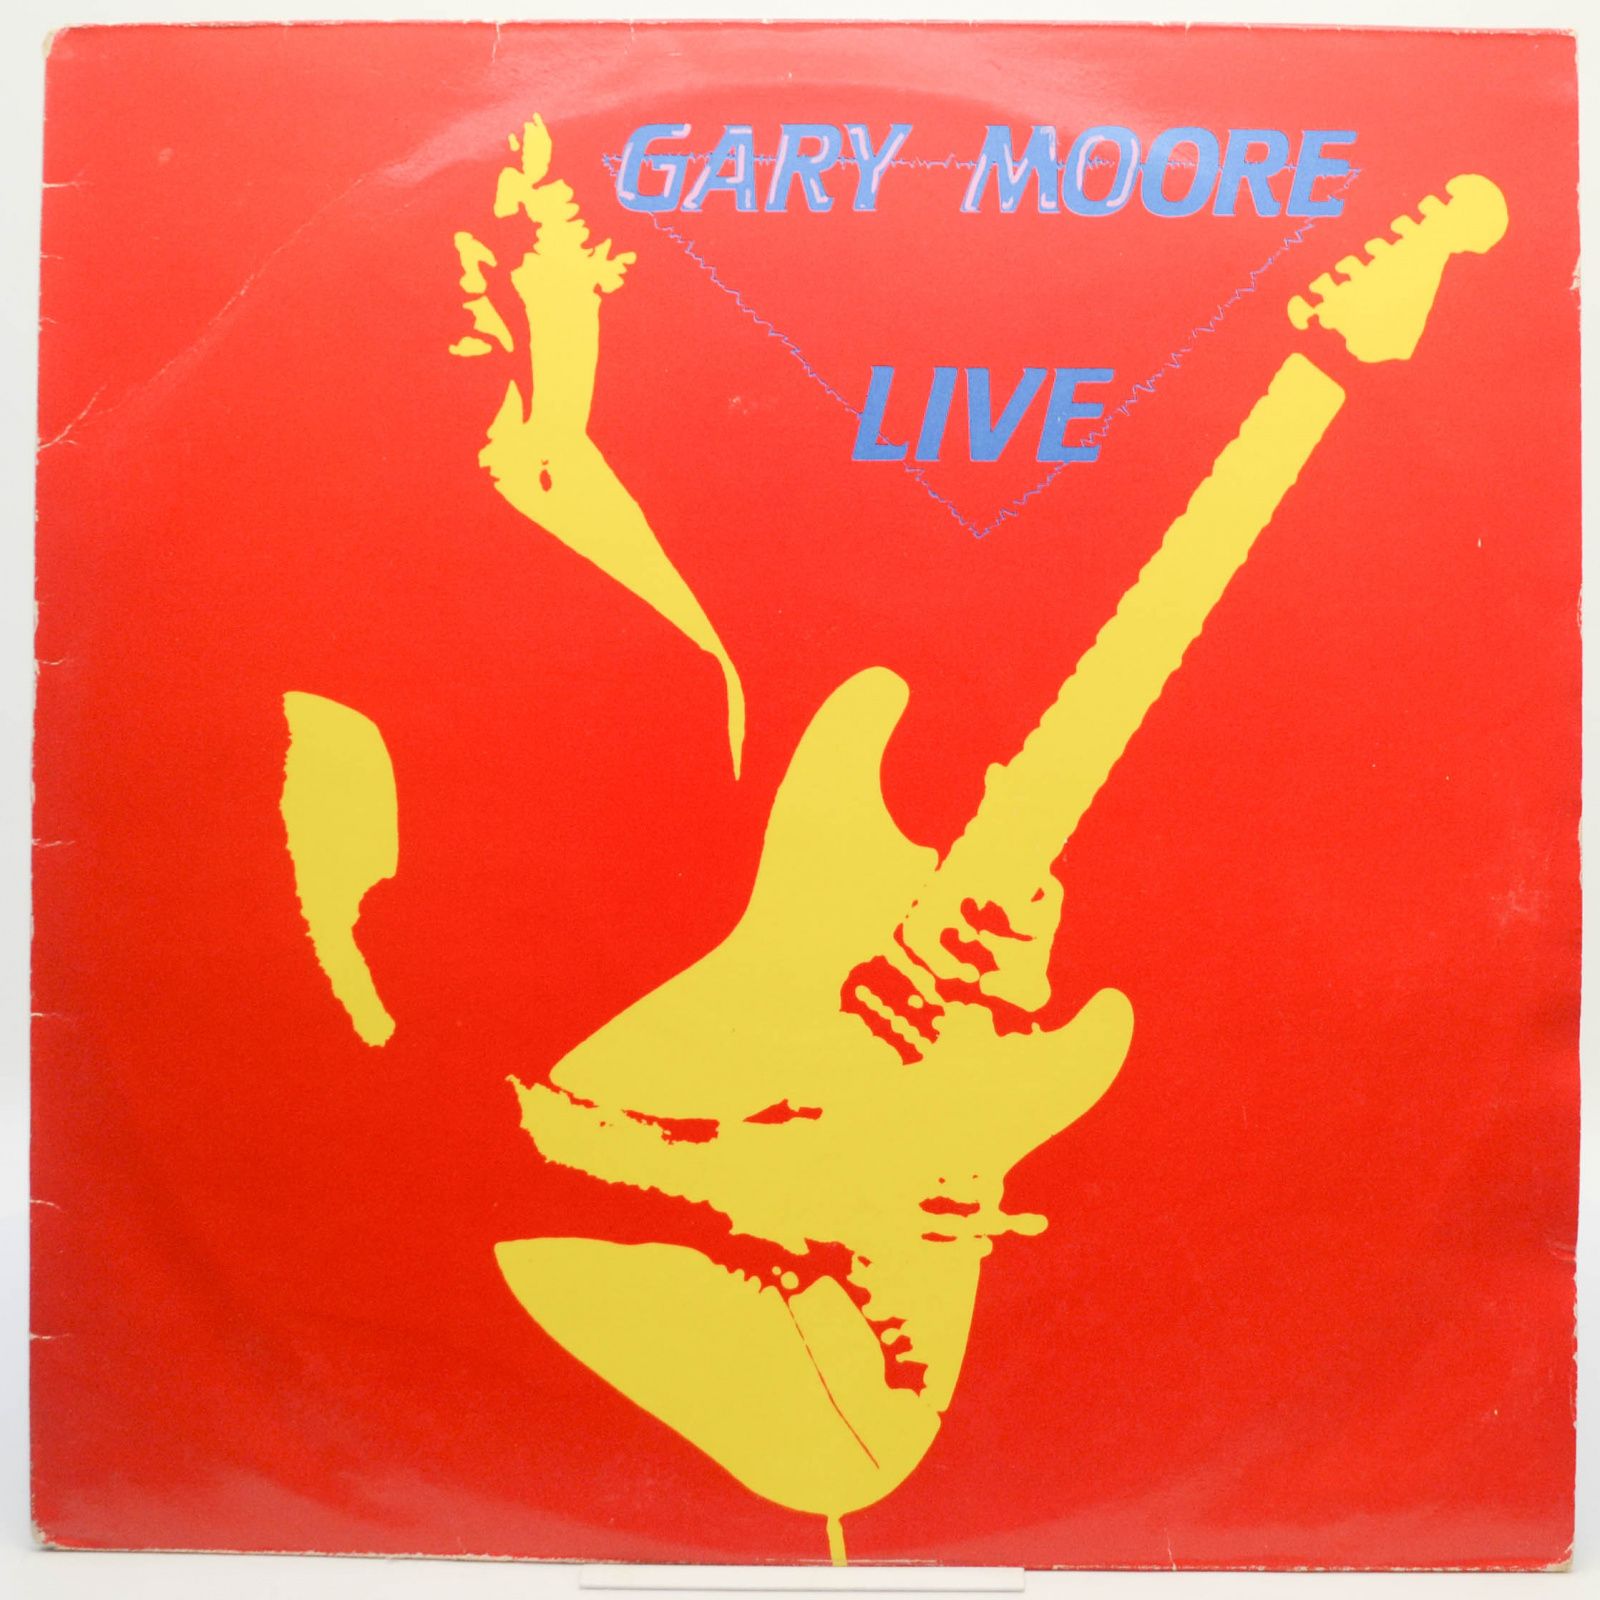 Live (UK), 1984